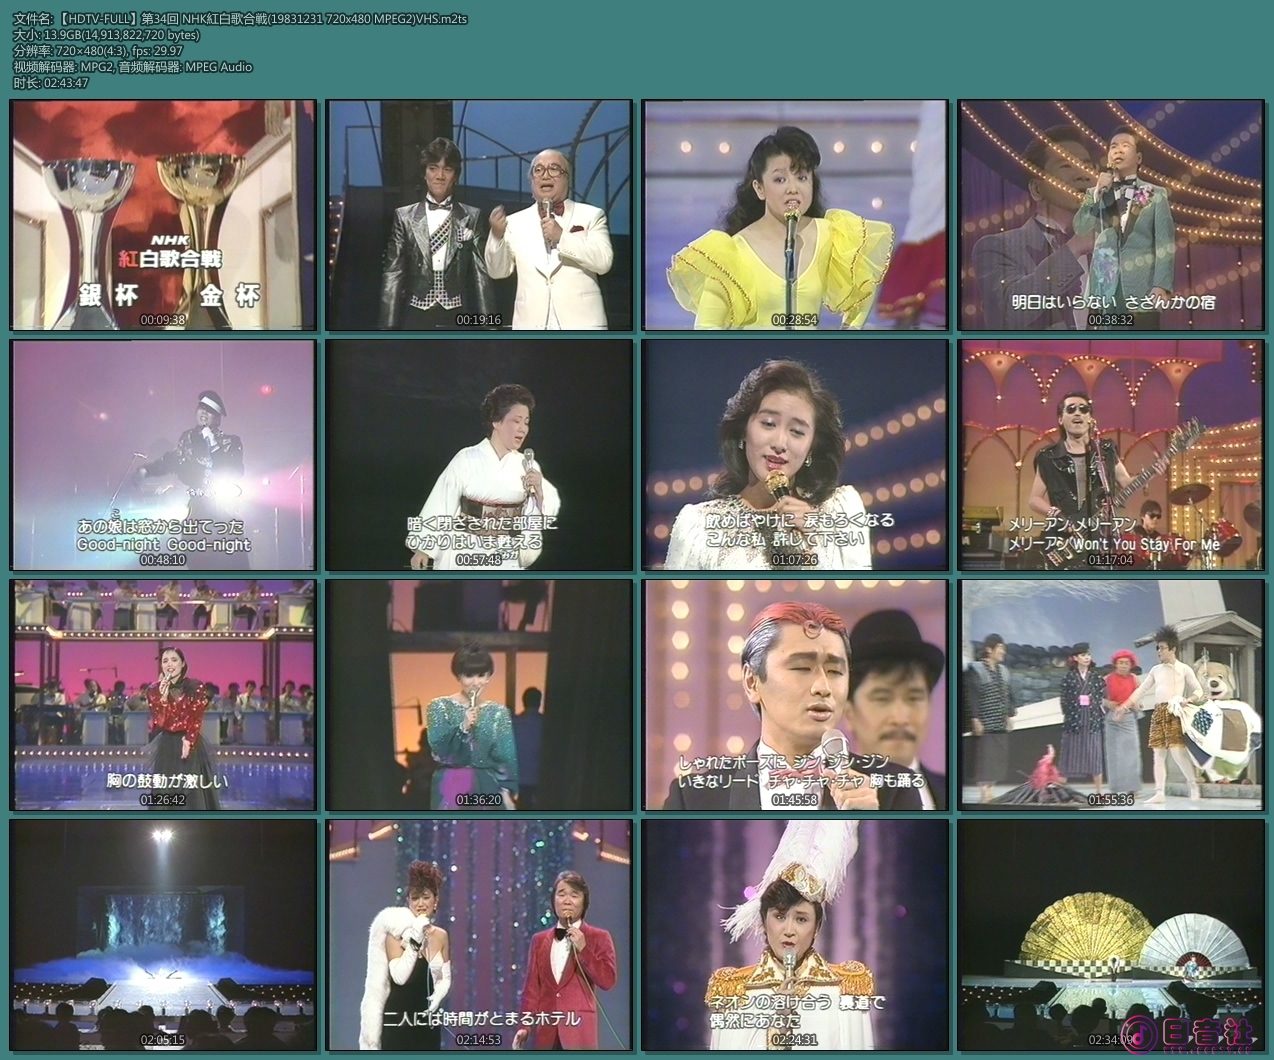 【HDTV-FULL】第34回 NHK紅白歌合戦(19831231 720x480 MPEG2)VHS.m2ts.jpg